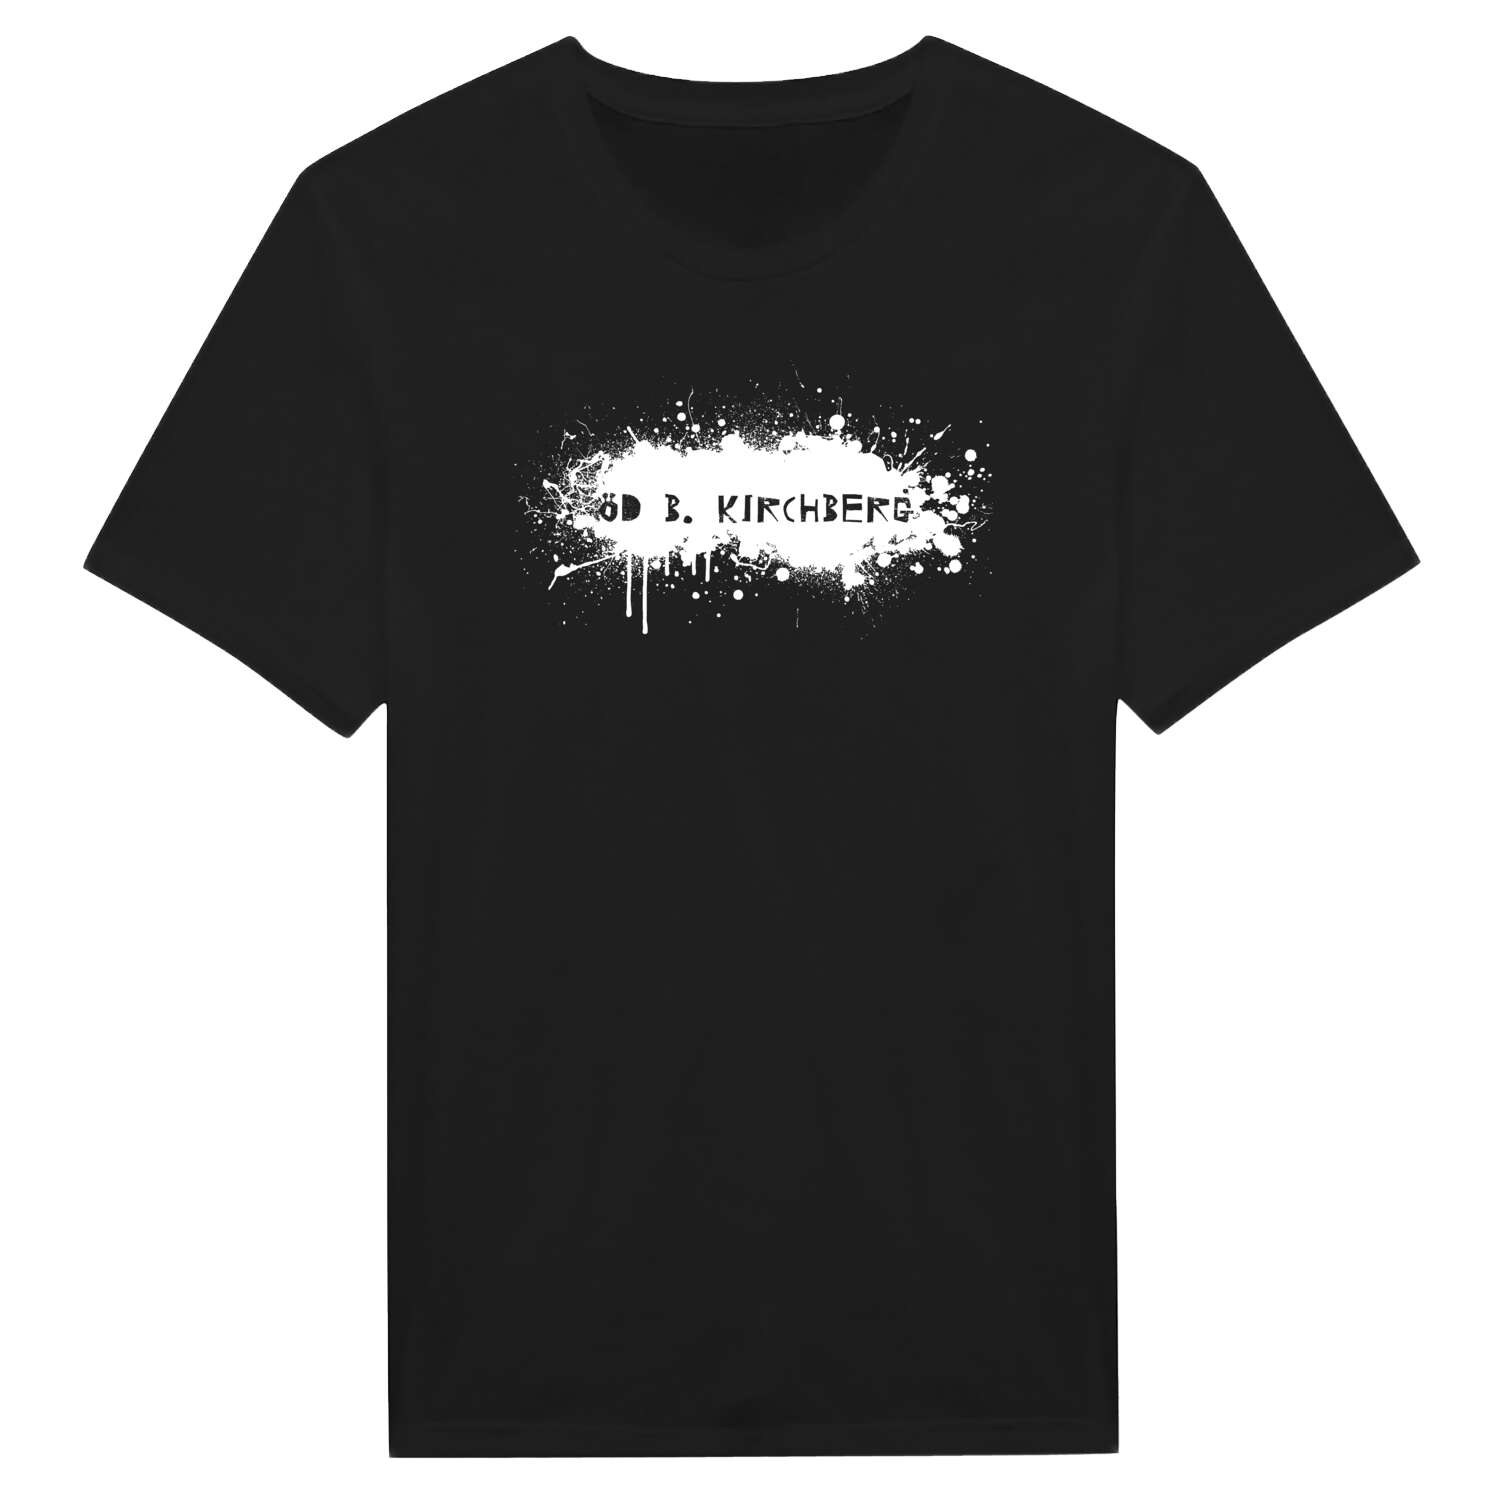 Öd b. Kirchberg T-Shirt »Paint Splash Punk«